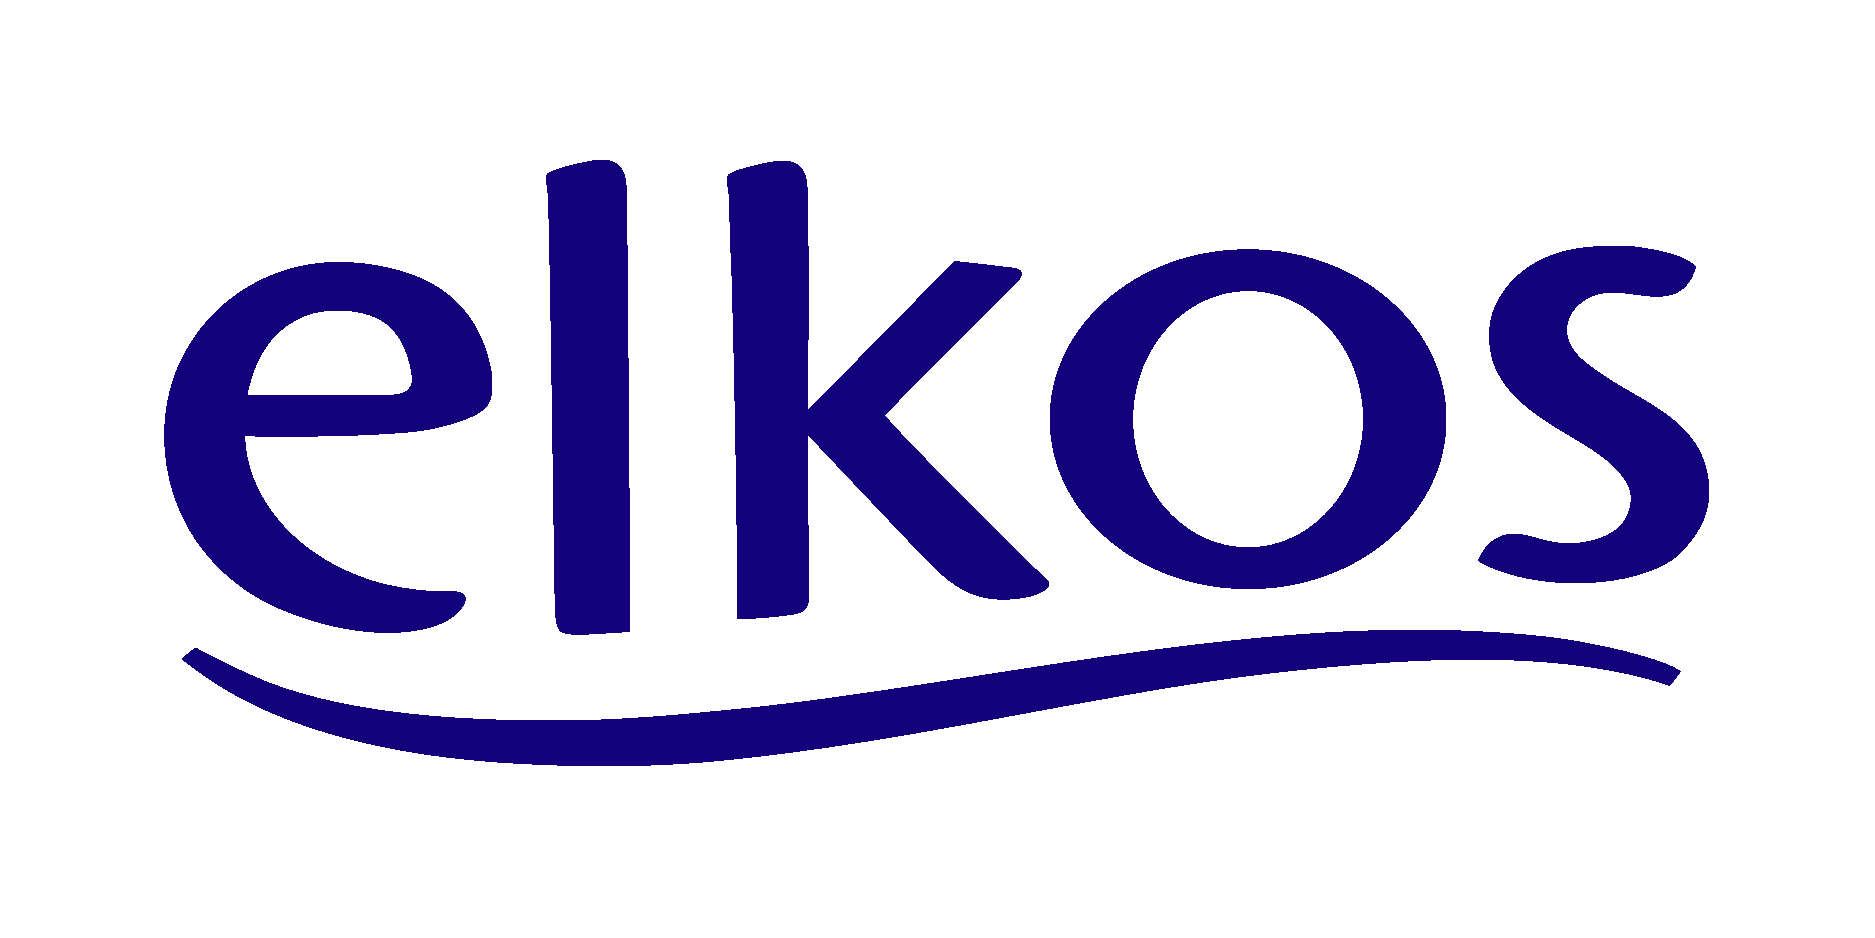 Elkos Logo Vector - (.Ai .PNG .SVG .EPS Free Download)